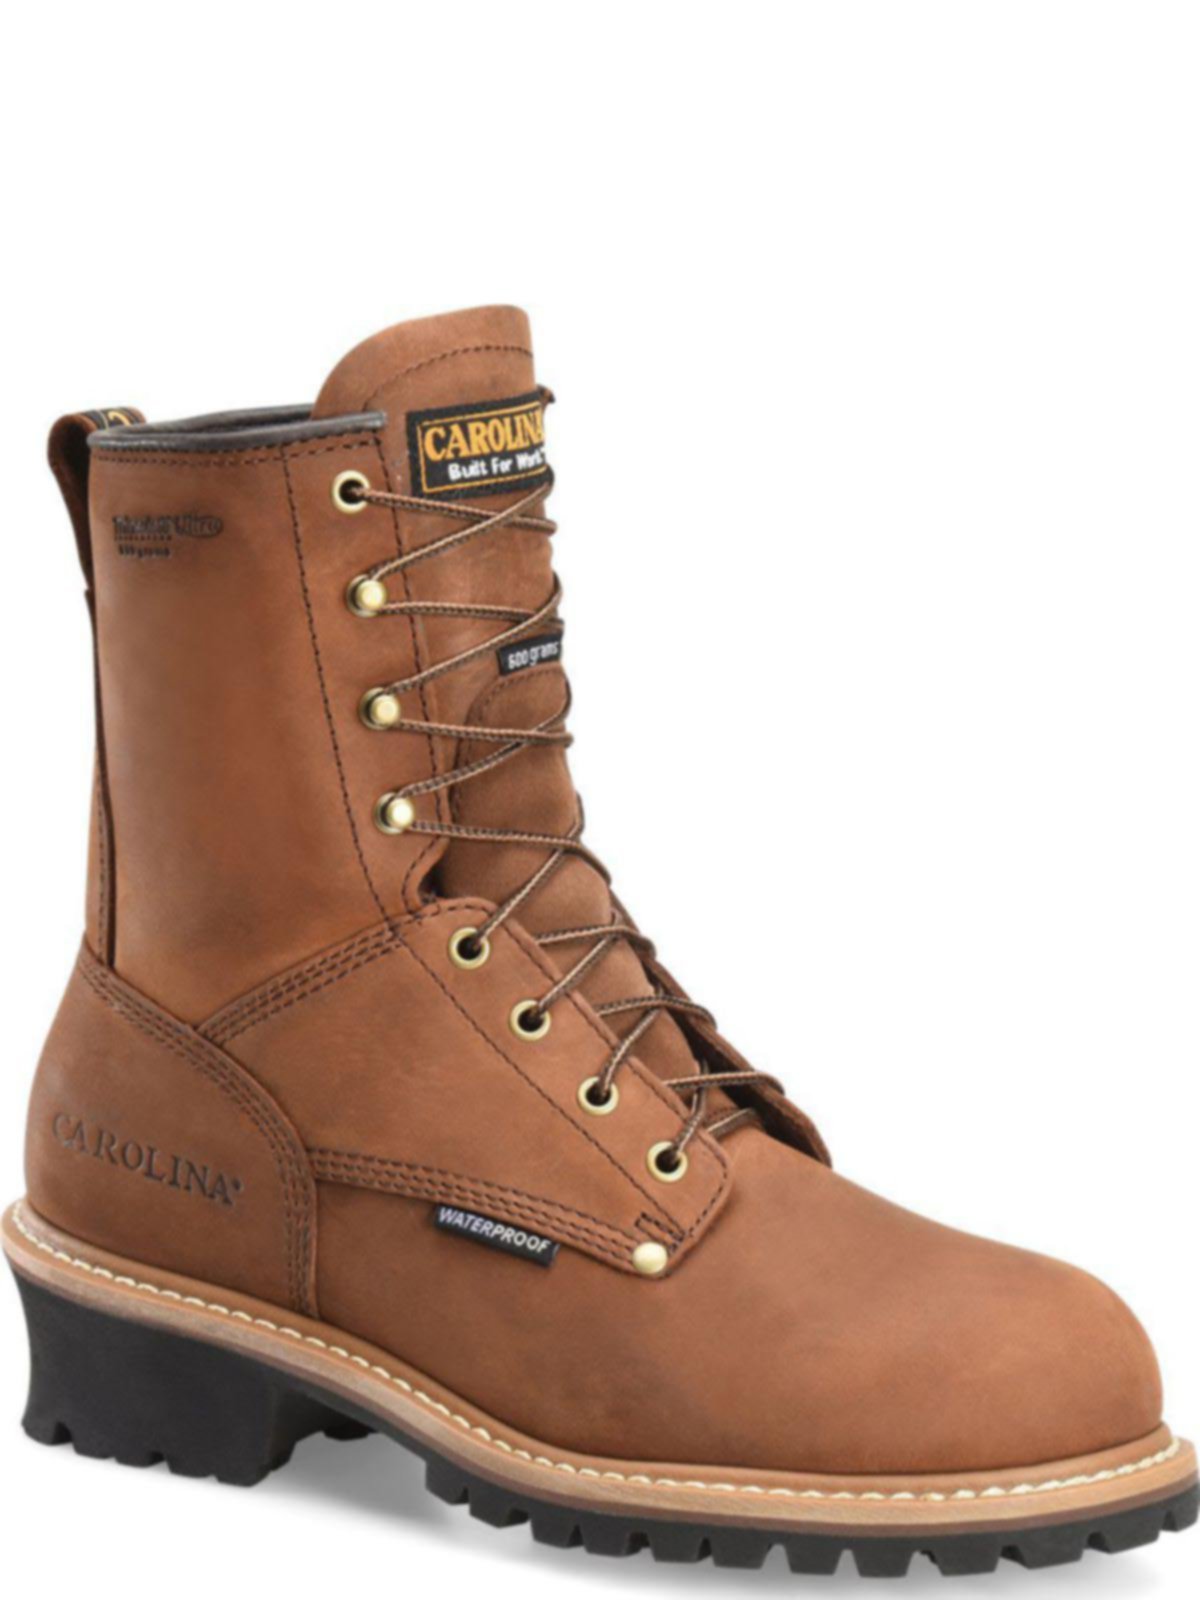 Shop Carolina Mens Waterproof Insulated Logger Boot CA4821 | Save 20% ...